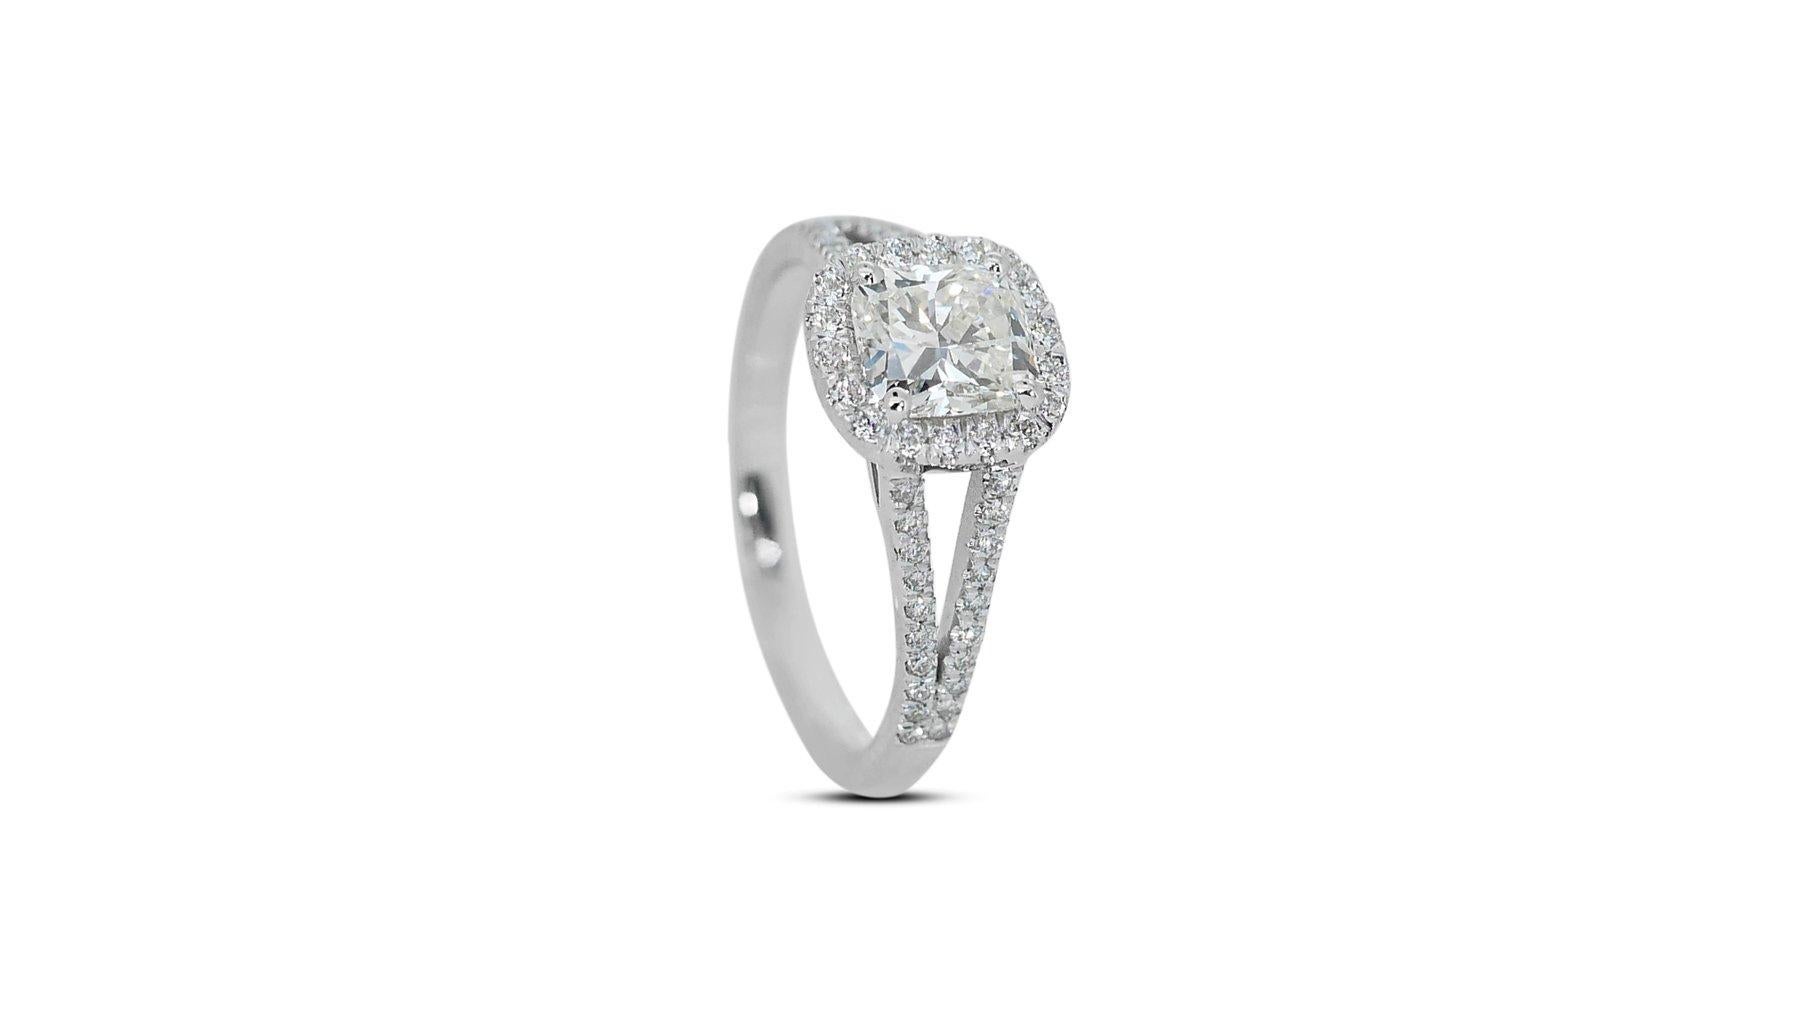 Captivating Ring features a Dazzling 1.01 carat cushion cut Natural Diamond 2